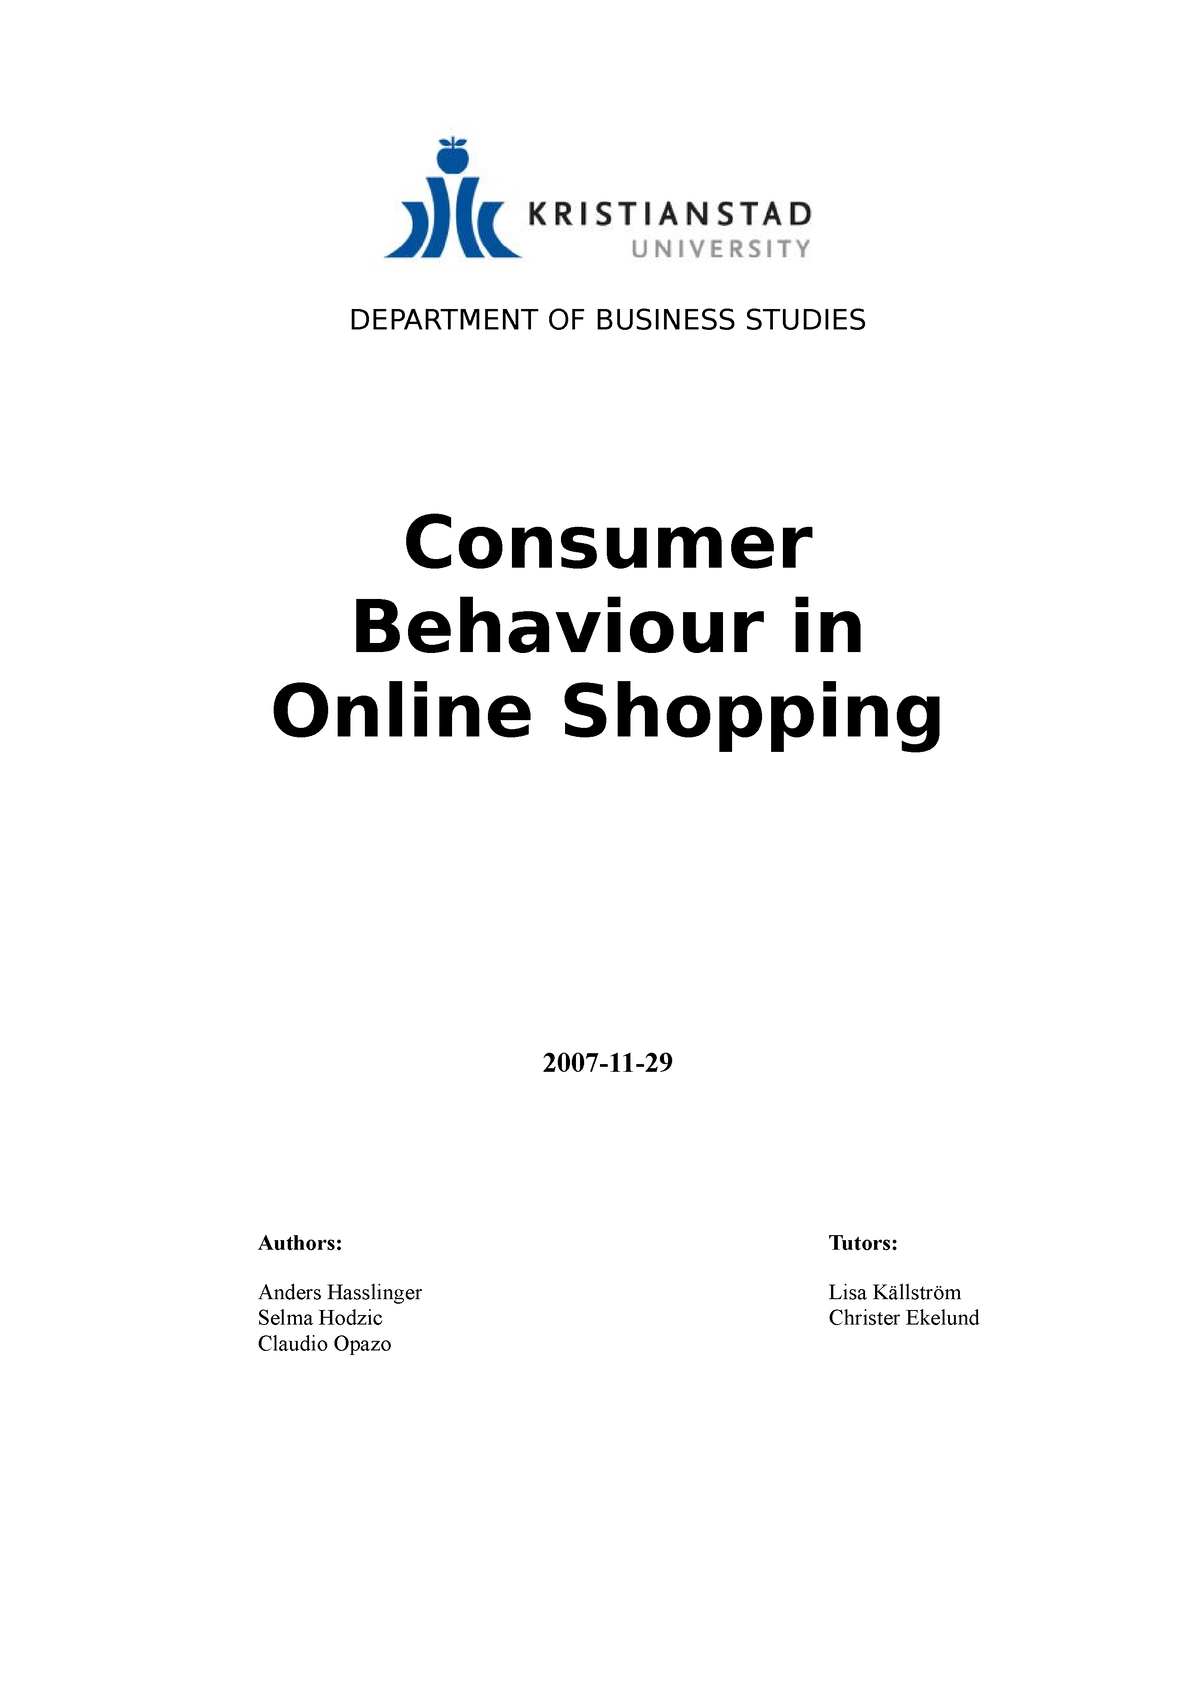 thesis on consumer behaviour